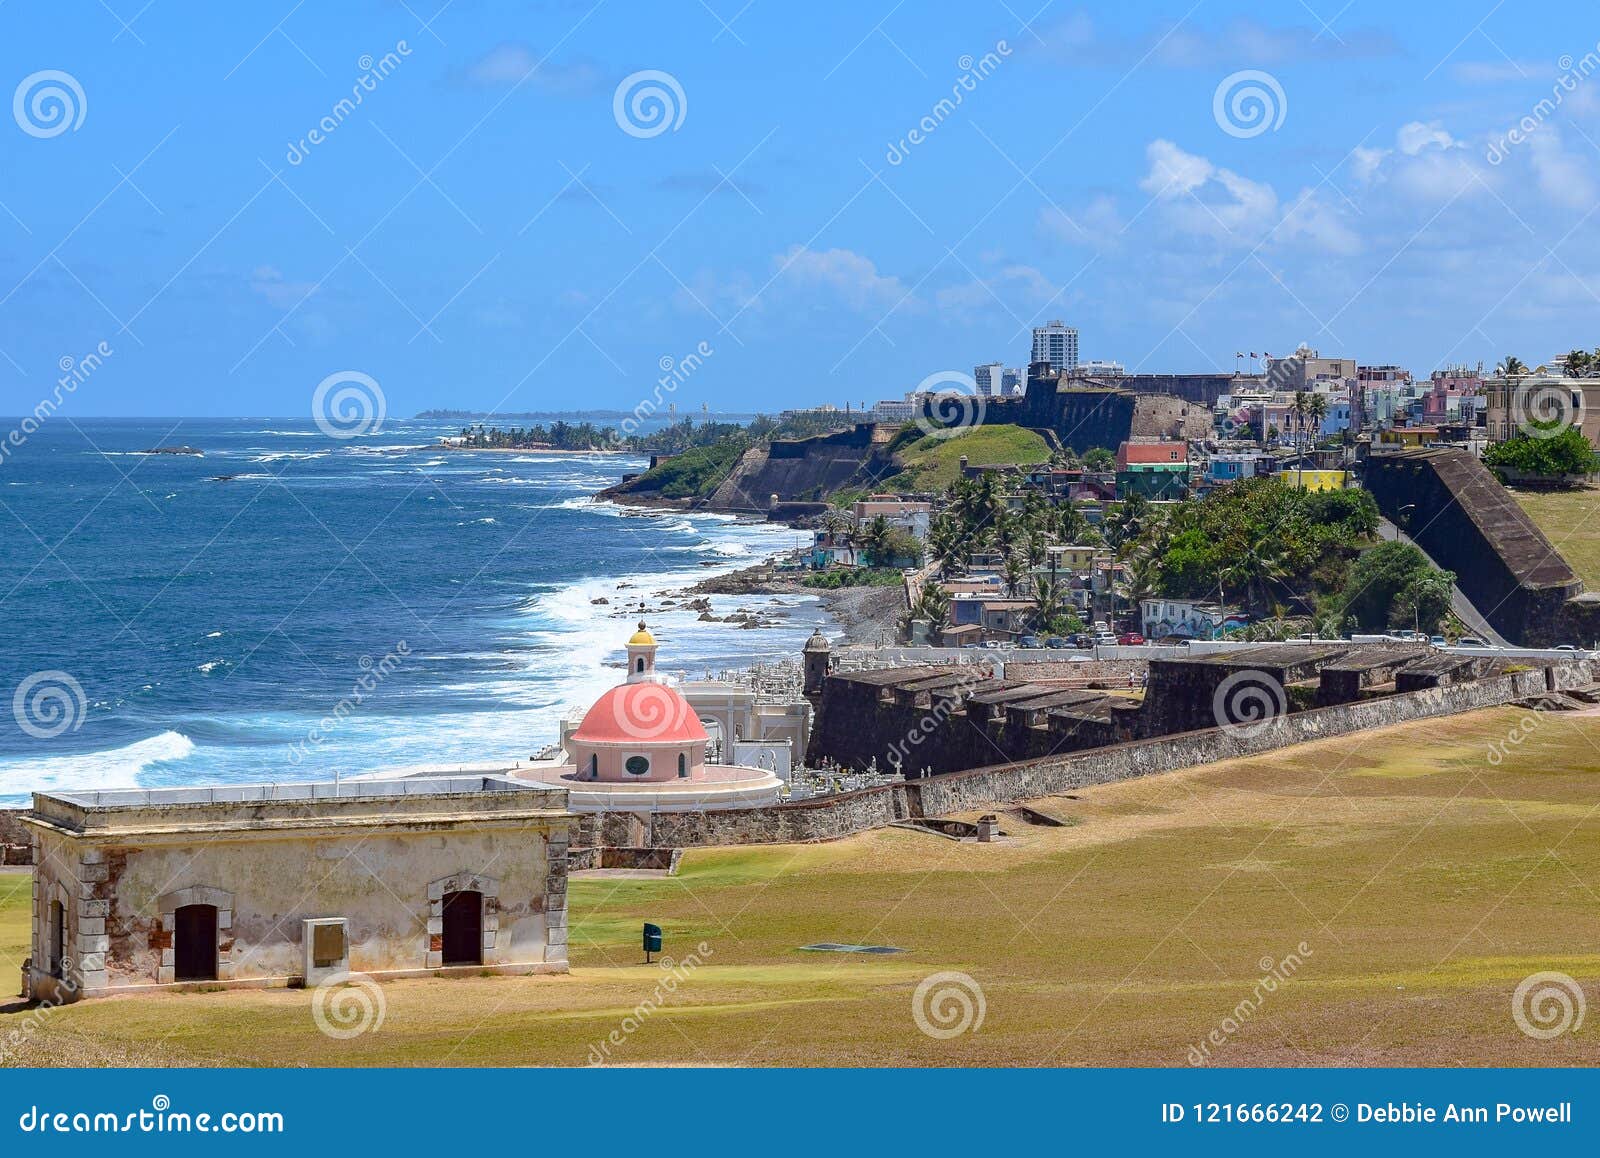 san juan, puerto rico - april 02 2014: coastline view in old san juan